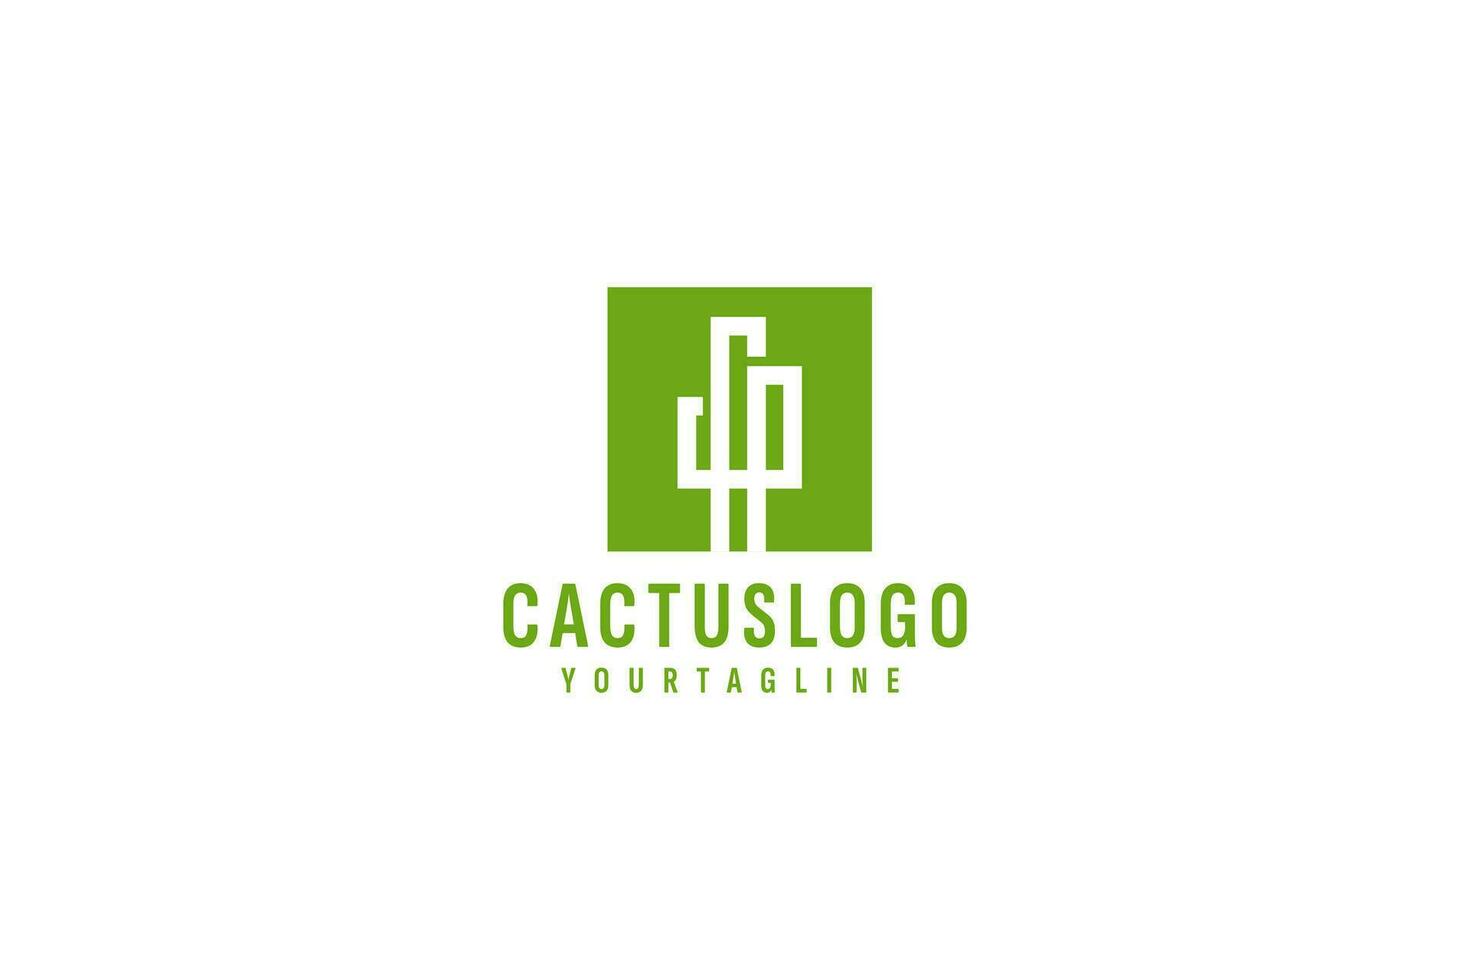 Cactus logo vector icon illustration